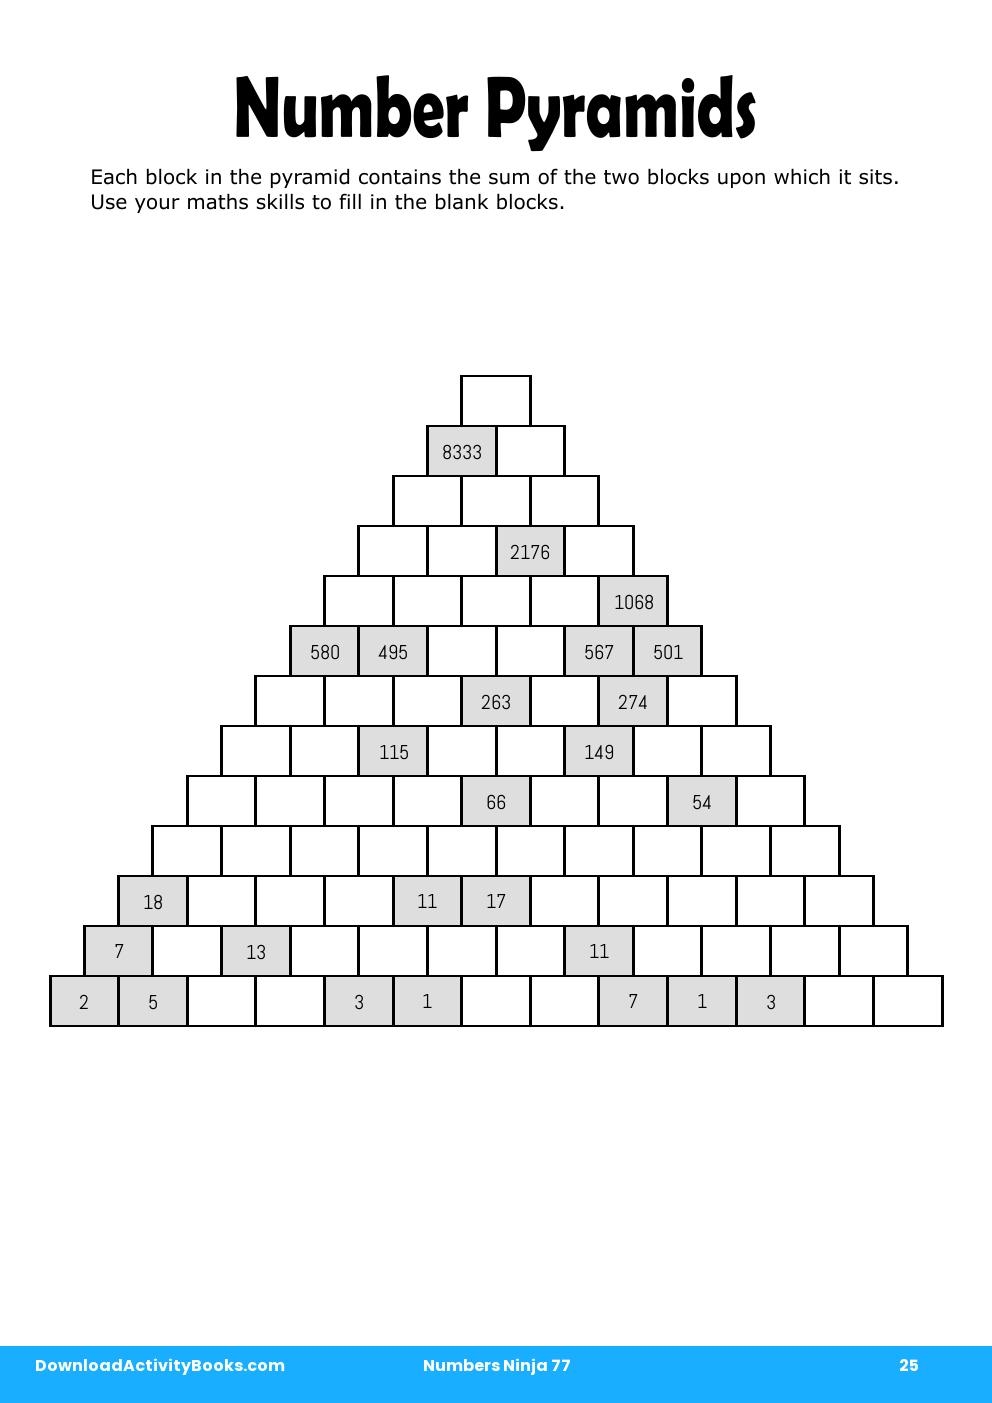 Number Pyramids in Numbers Ninja 77